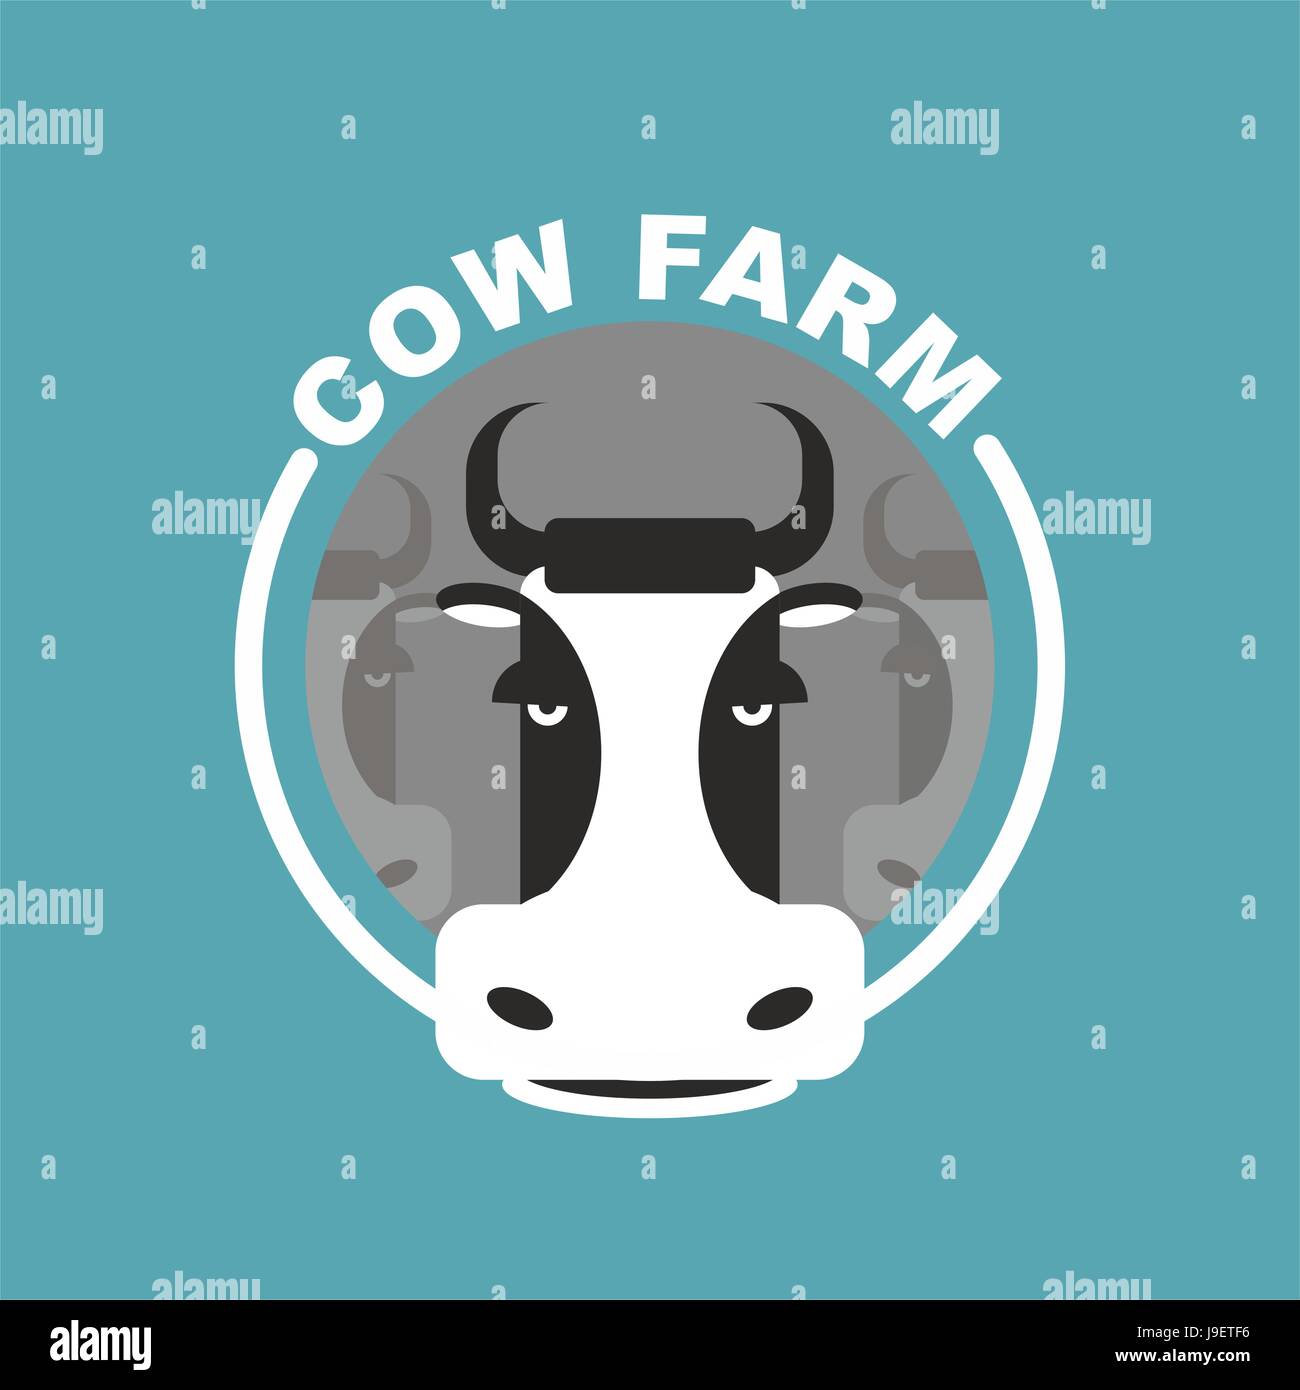 Cow farm logo. Head of a cow. Emblem, sign for farm livestock. Vector illustration. Stock Vector